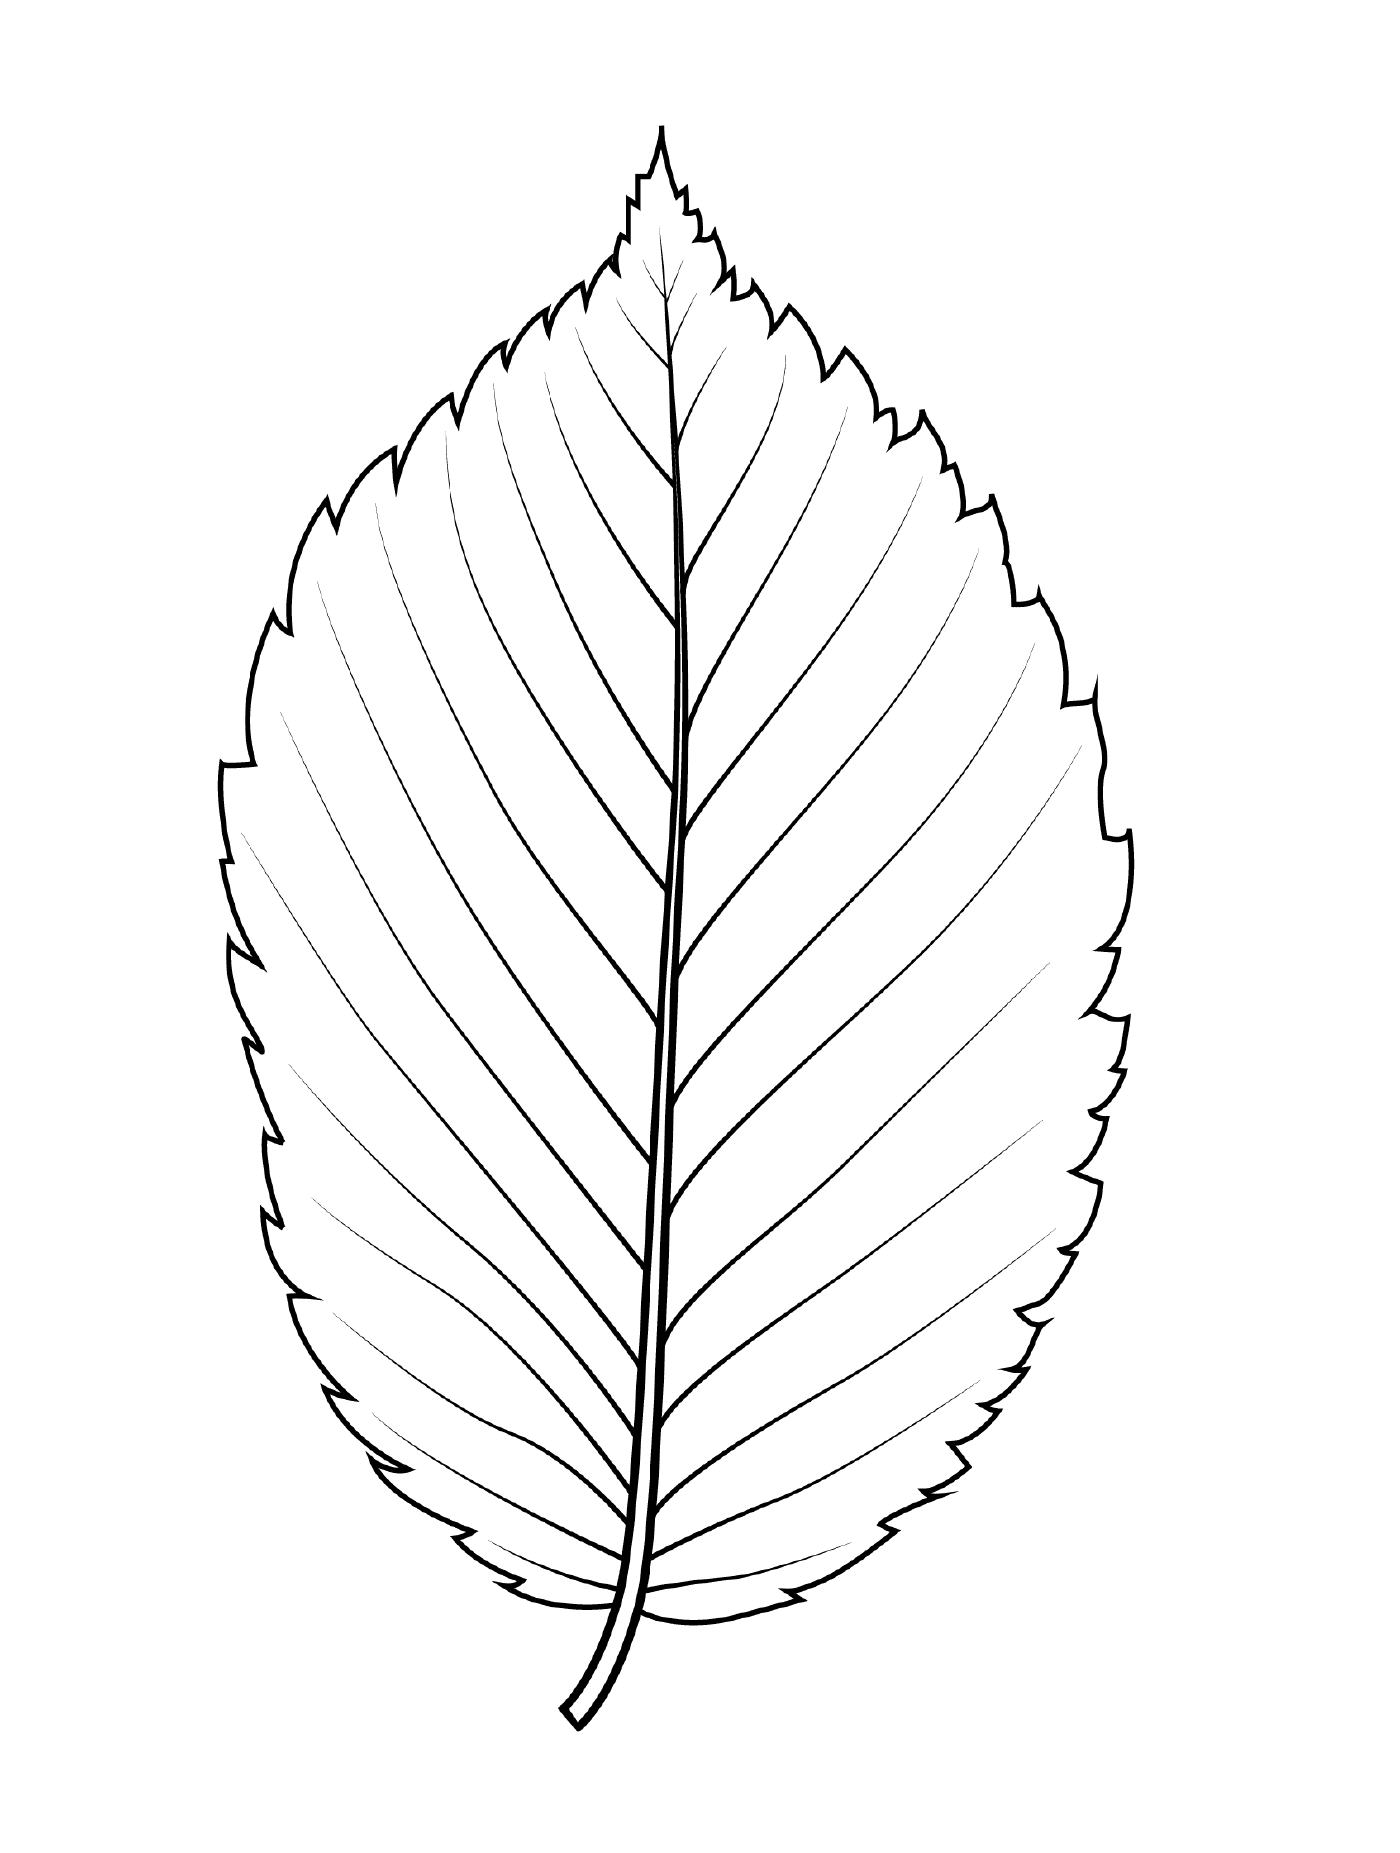  American elm leaf 